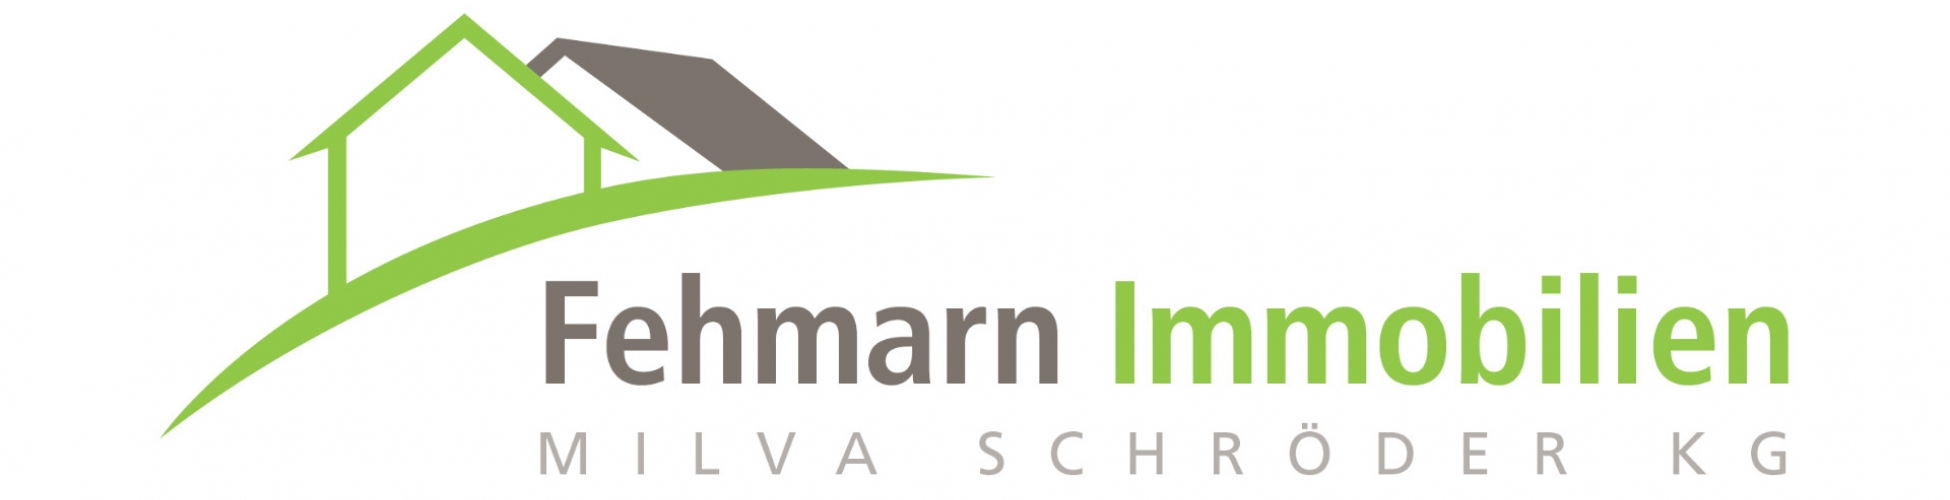 Fehmarn-Immobilen-logo